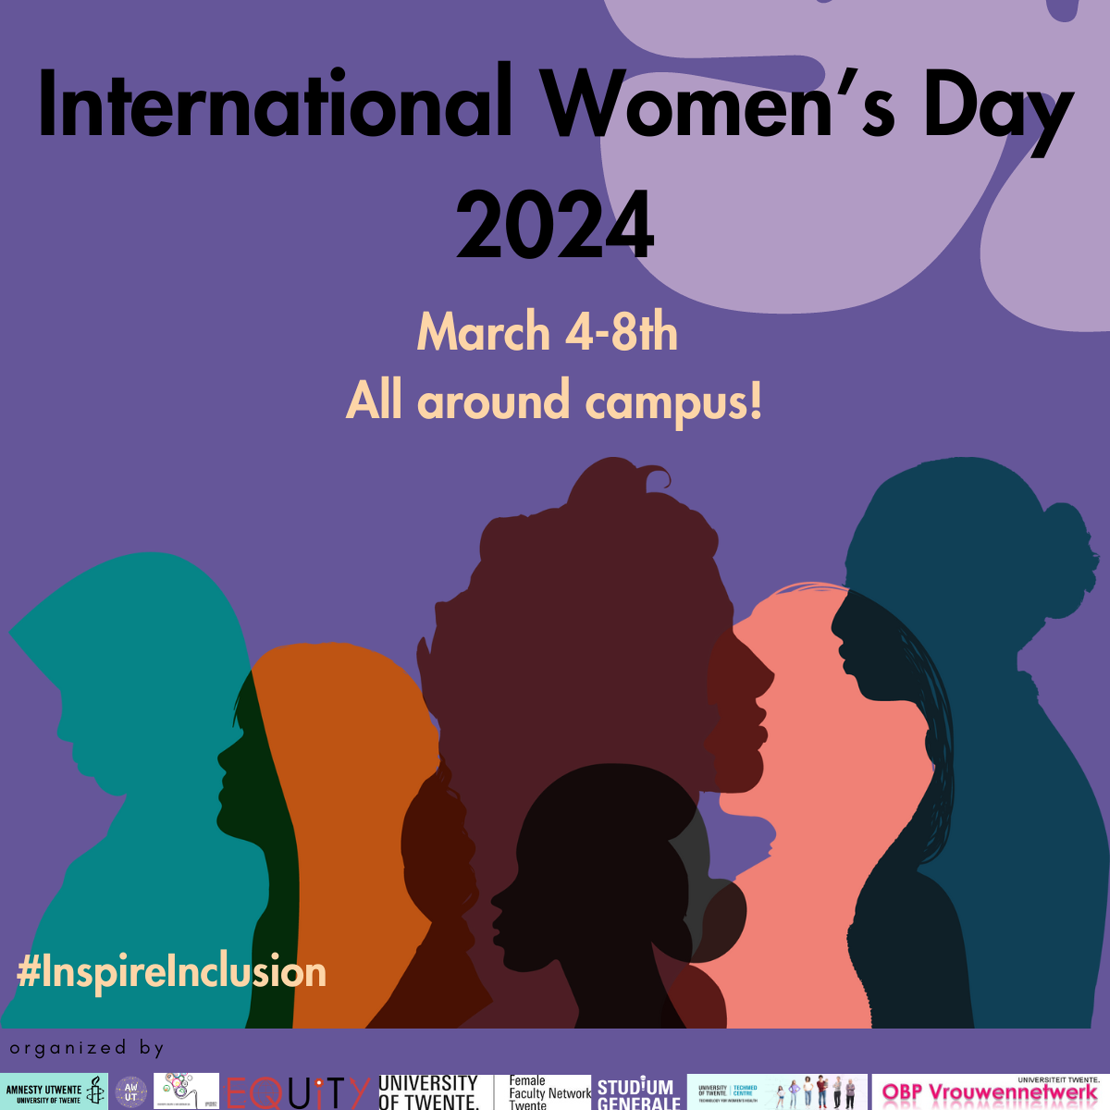 International Women's Day 2024 celebration at UT - you are invited!